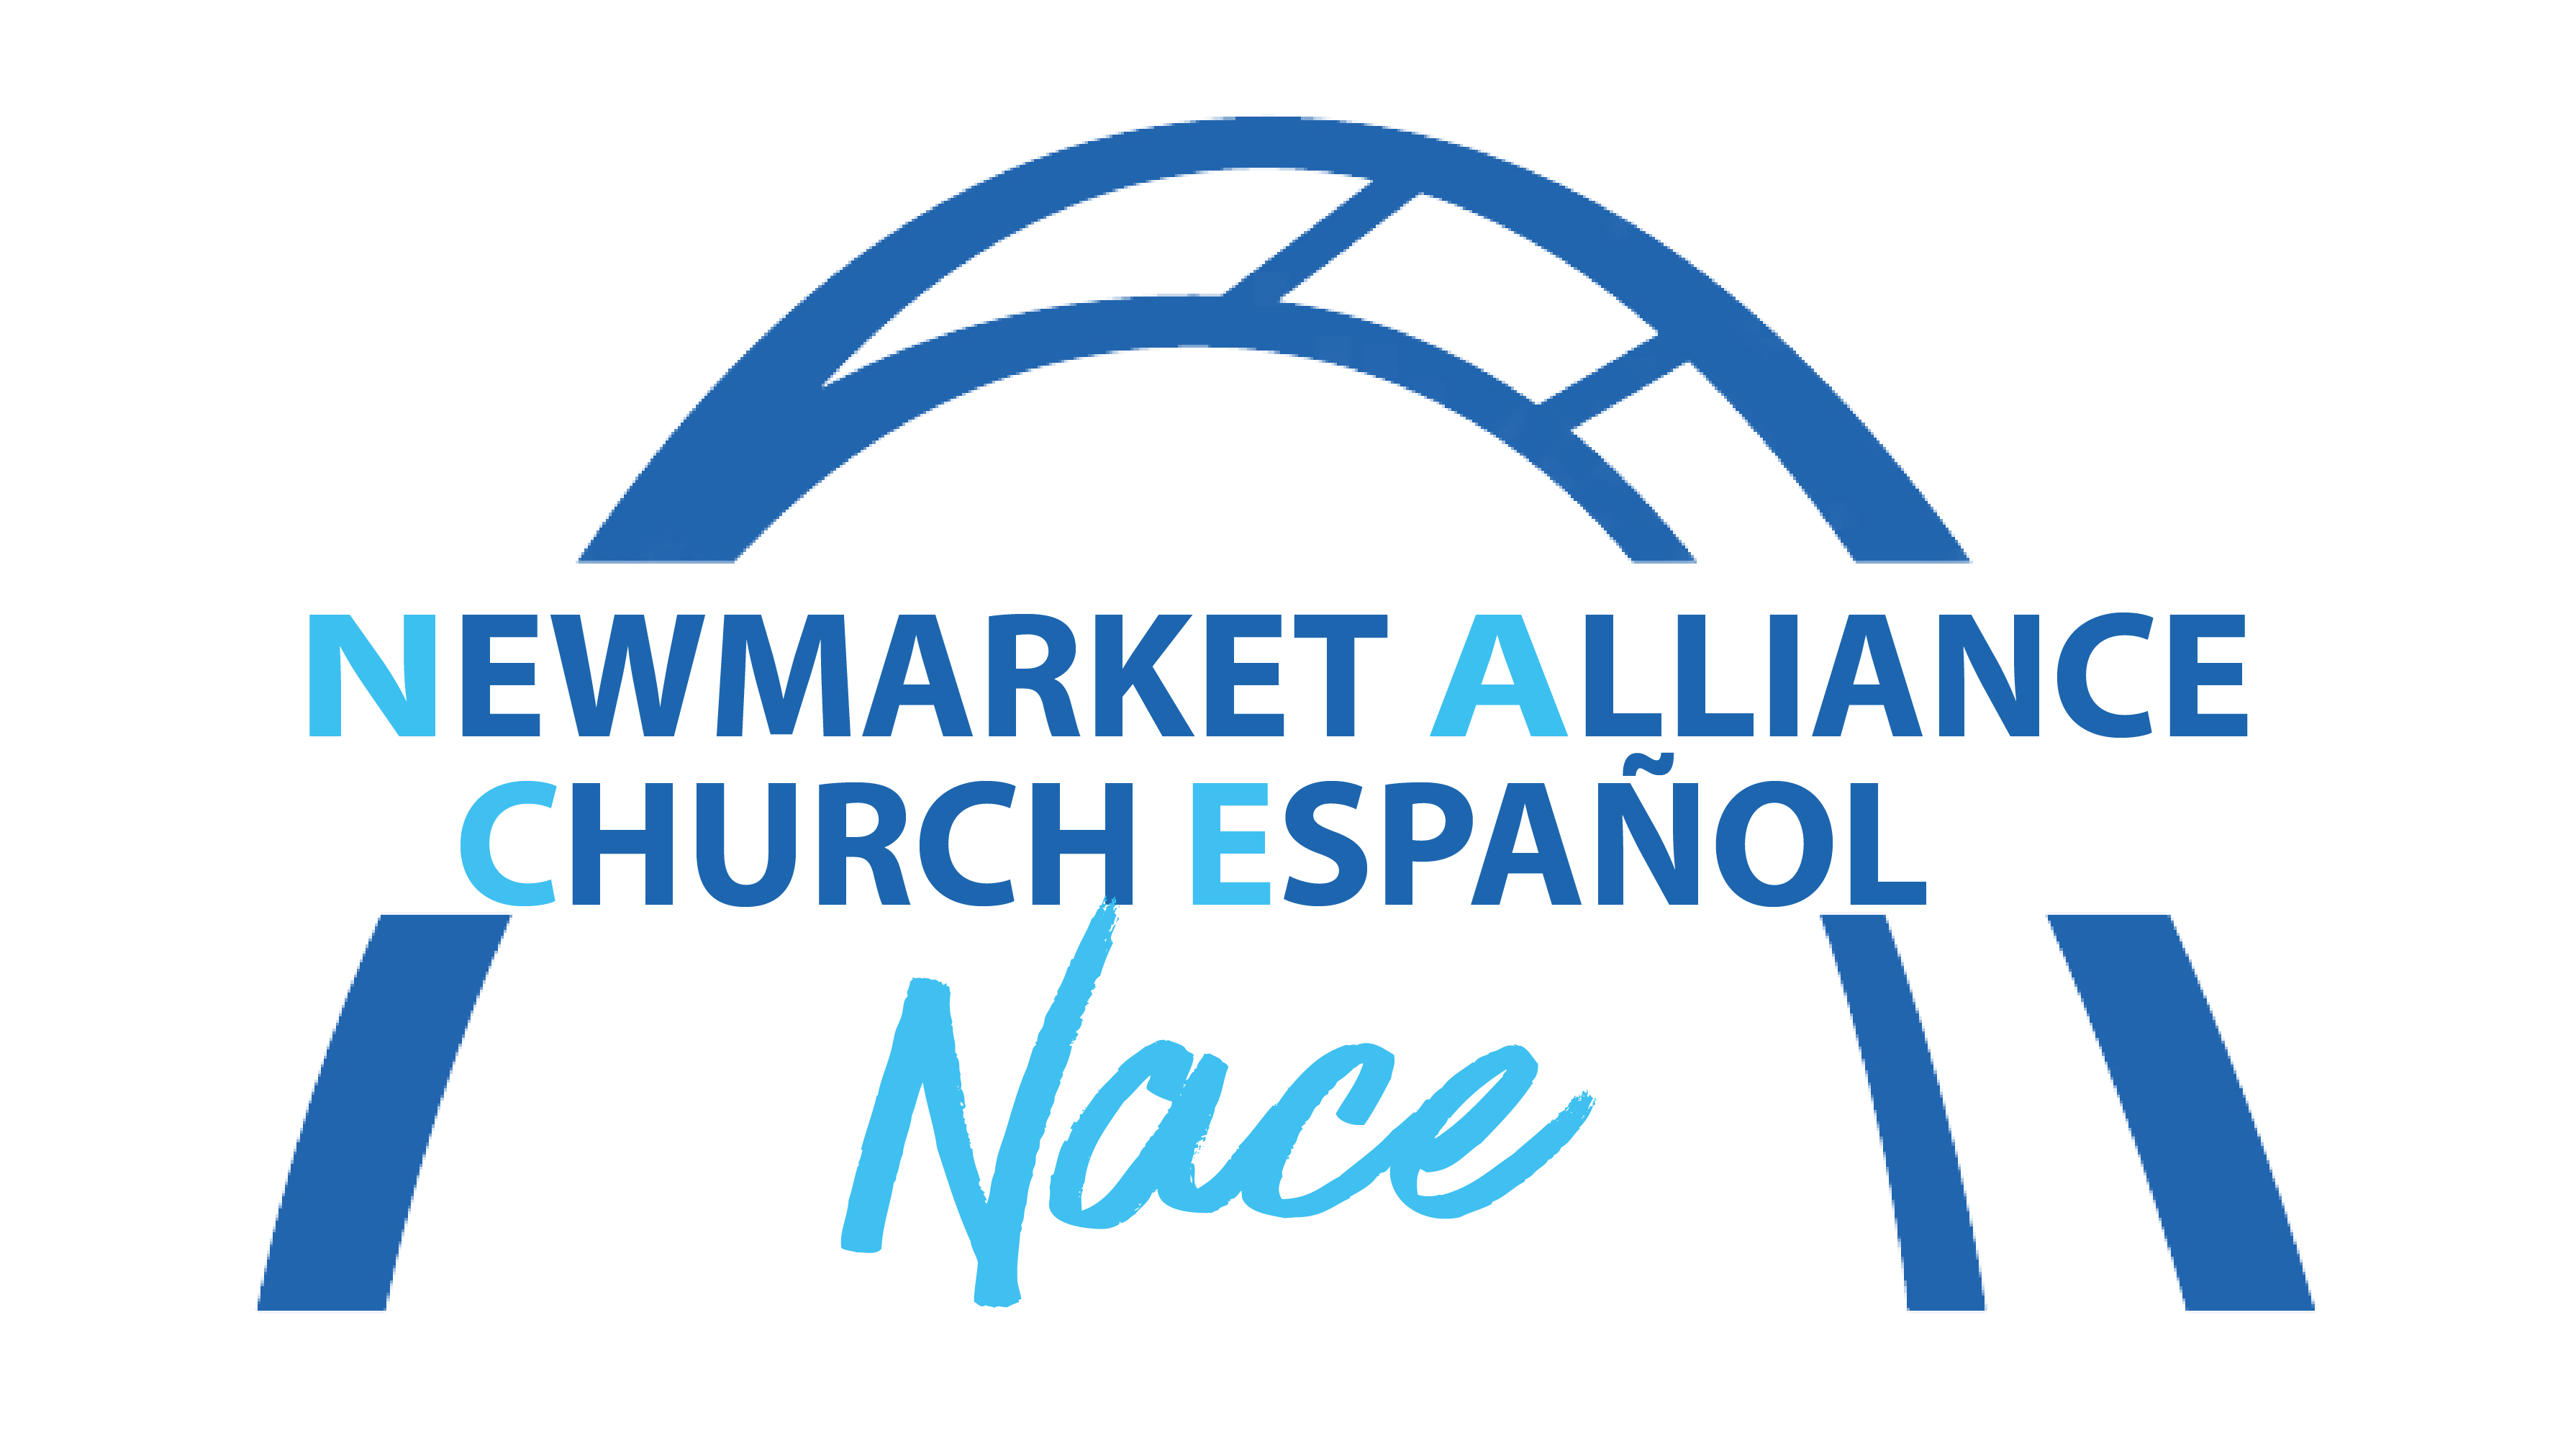 Newmarket Alliance Church Espanol